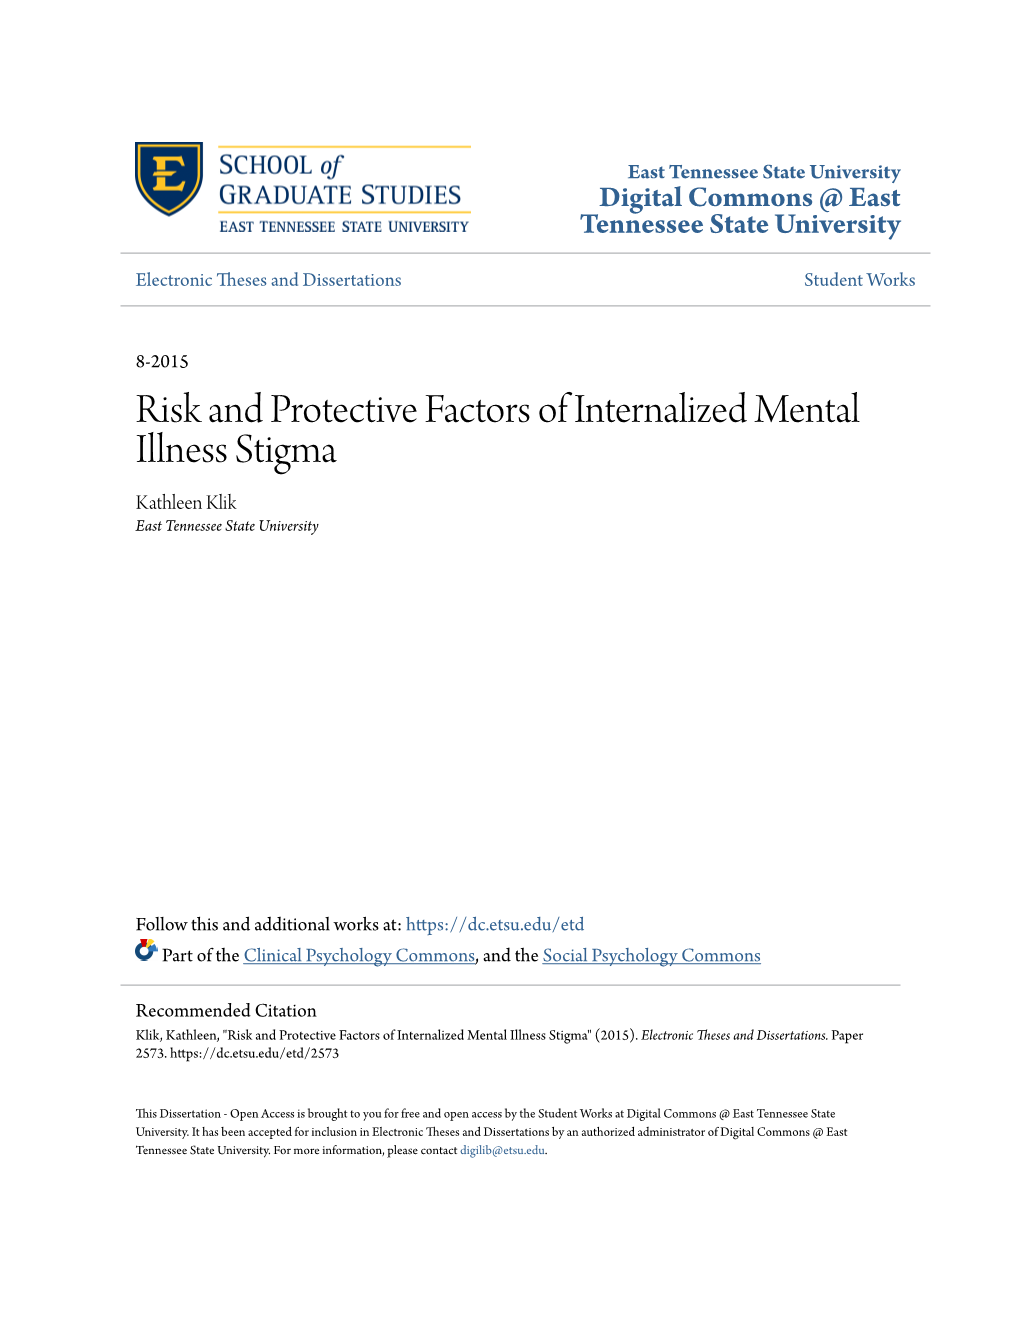 Risk and Protective Factors of Internalized Mental Illness Stigma Kathleen Klik East Tennessee State University